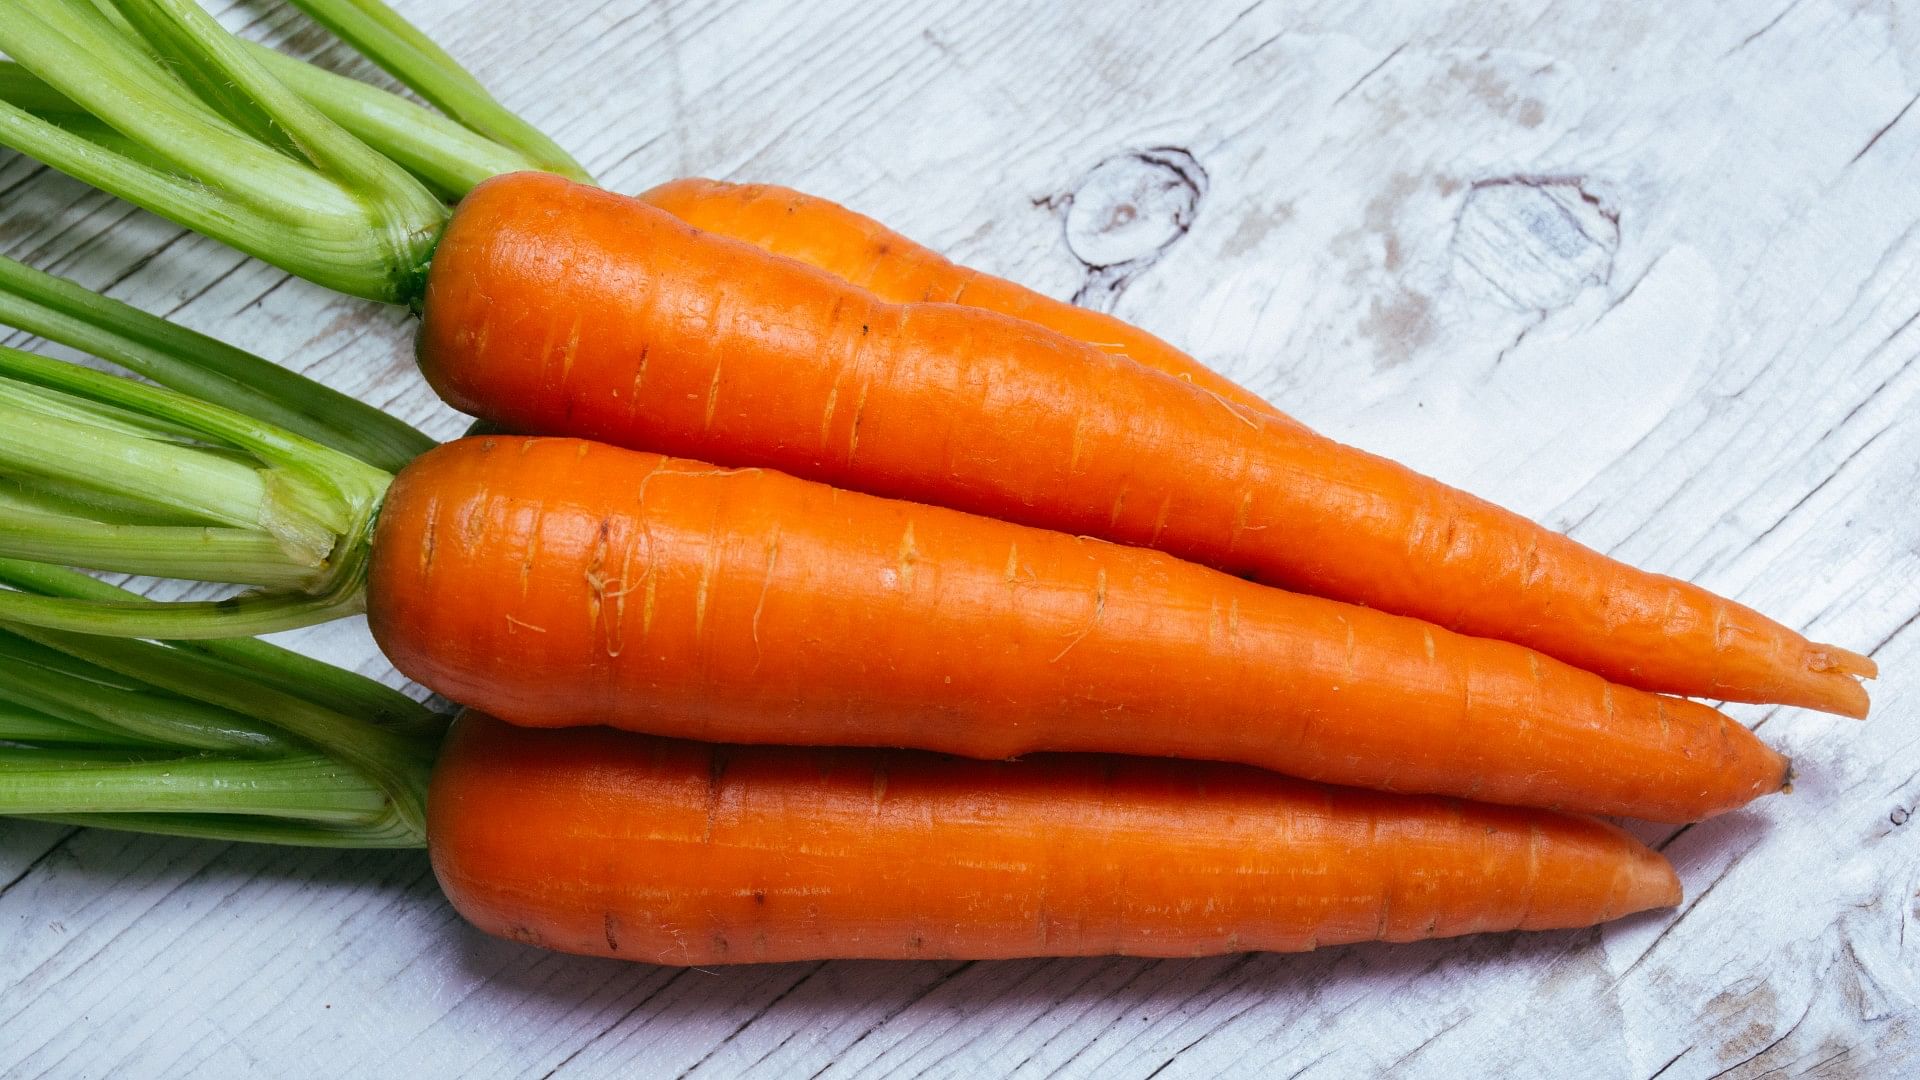 Gajar Khane ke Fayde Know The Benefits Of Eating Raw Carrot For Health In Hindi